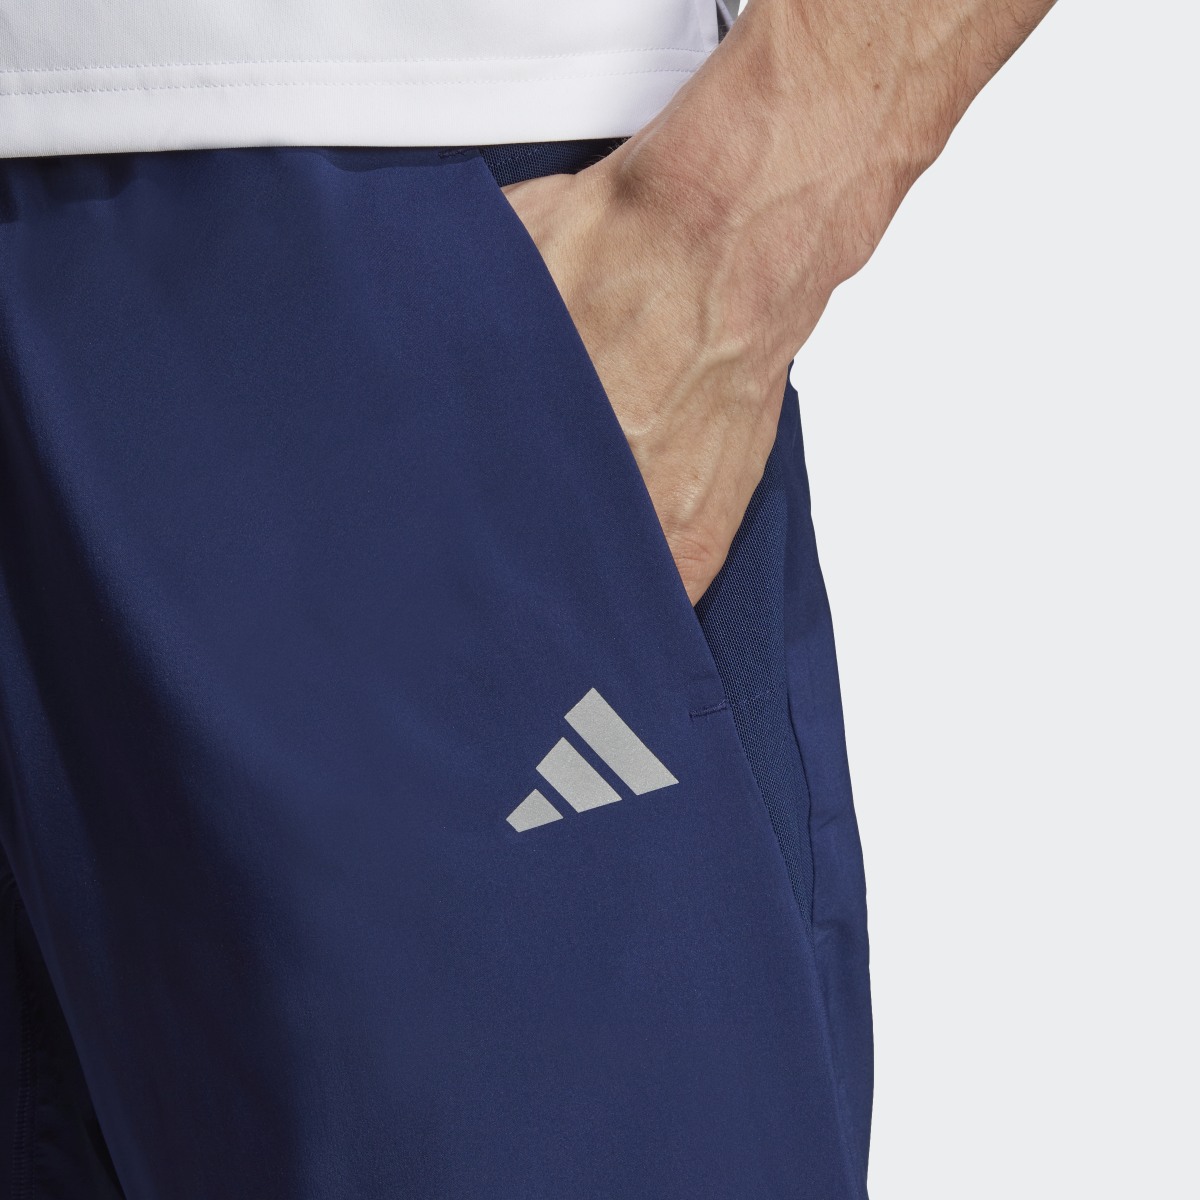 Adidas Own the Run Woven Astro Pants. 5